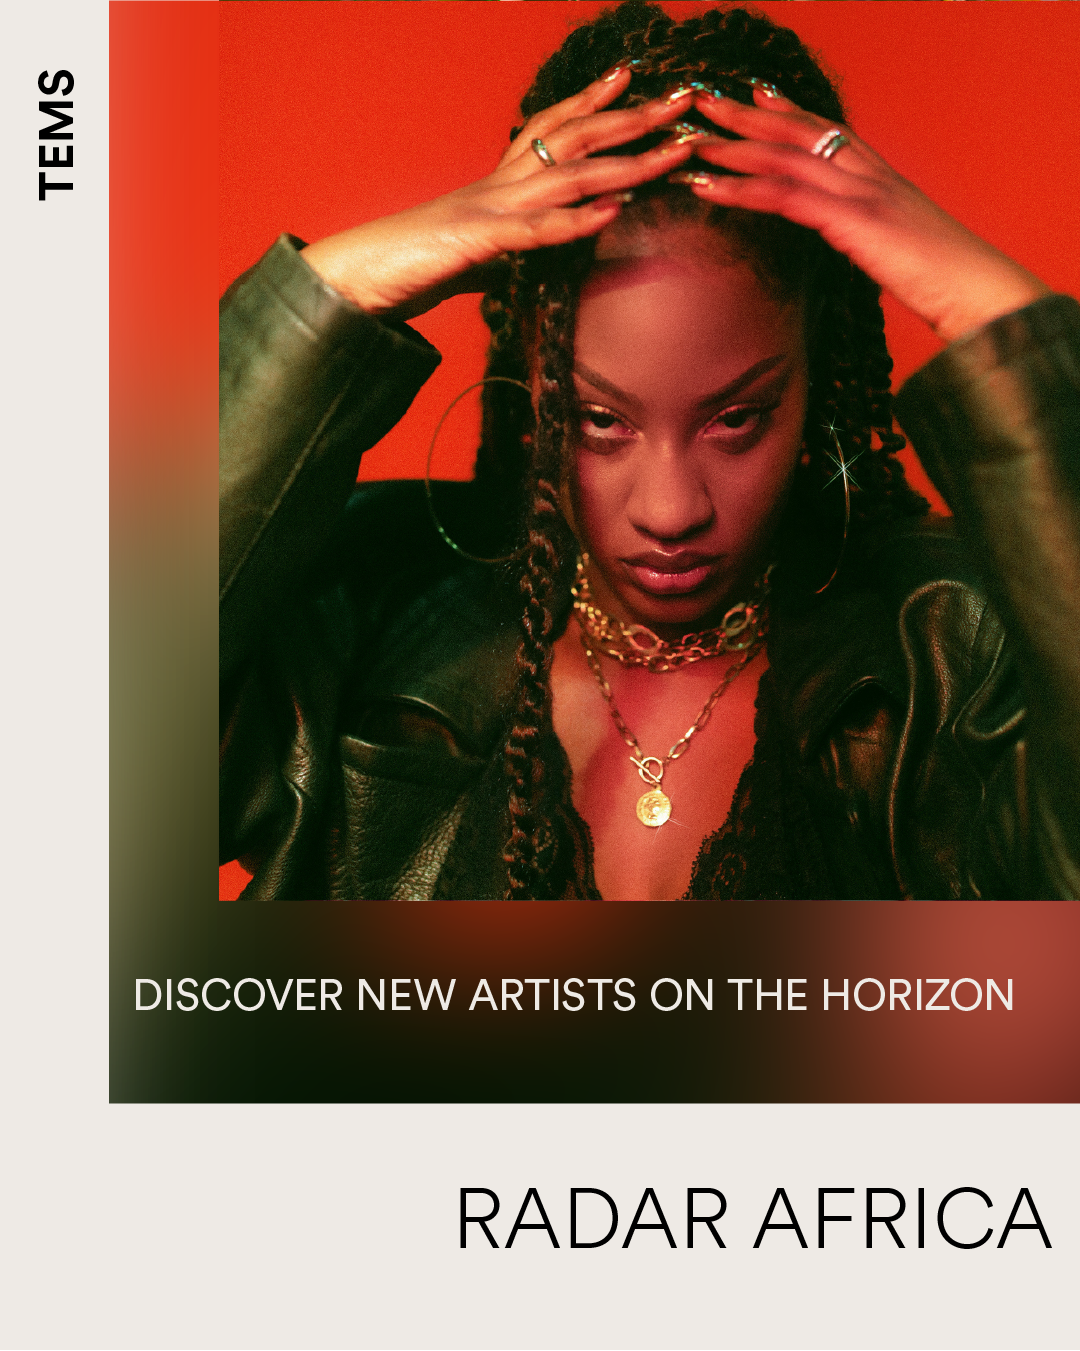 Spotify Announces Nigerian Sensation Tems as Latest RADAR Africa Artist